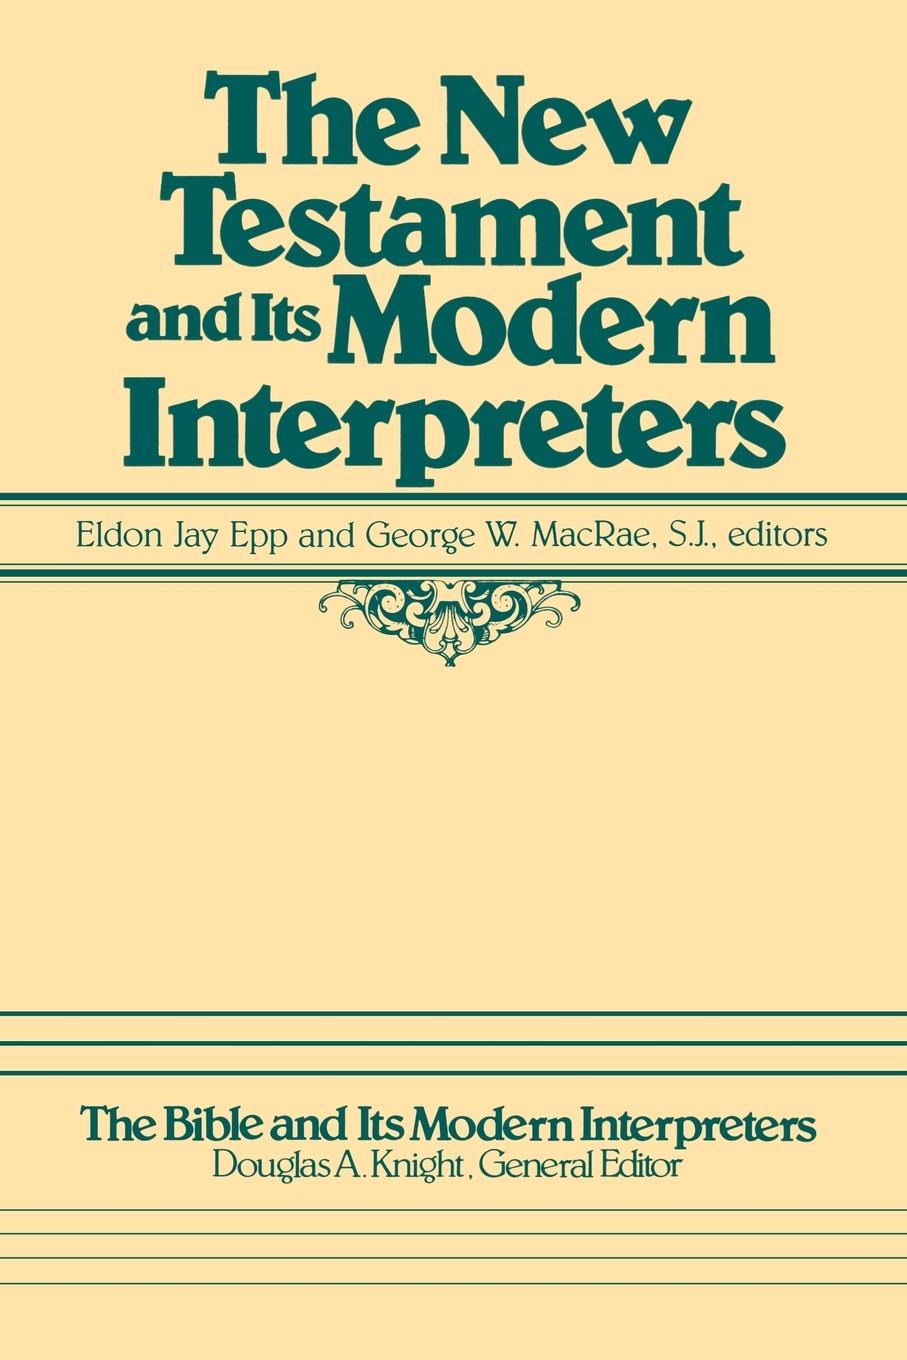 The New Testament and Its Modern Interpreters - MacRae, George W. , S. J. Epp, Eldon Jay